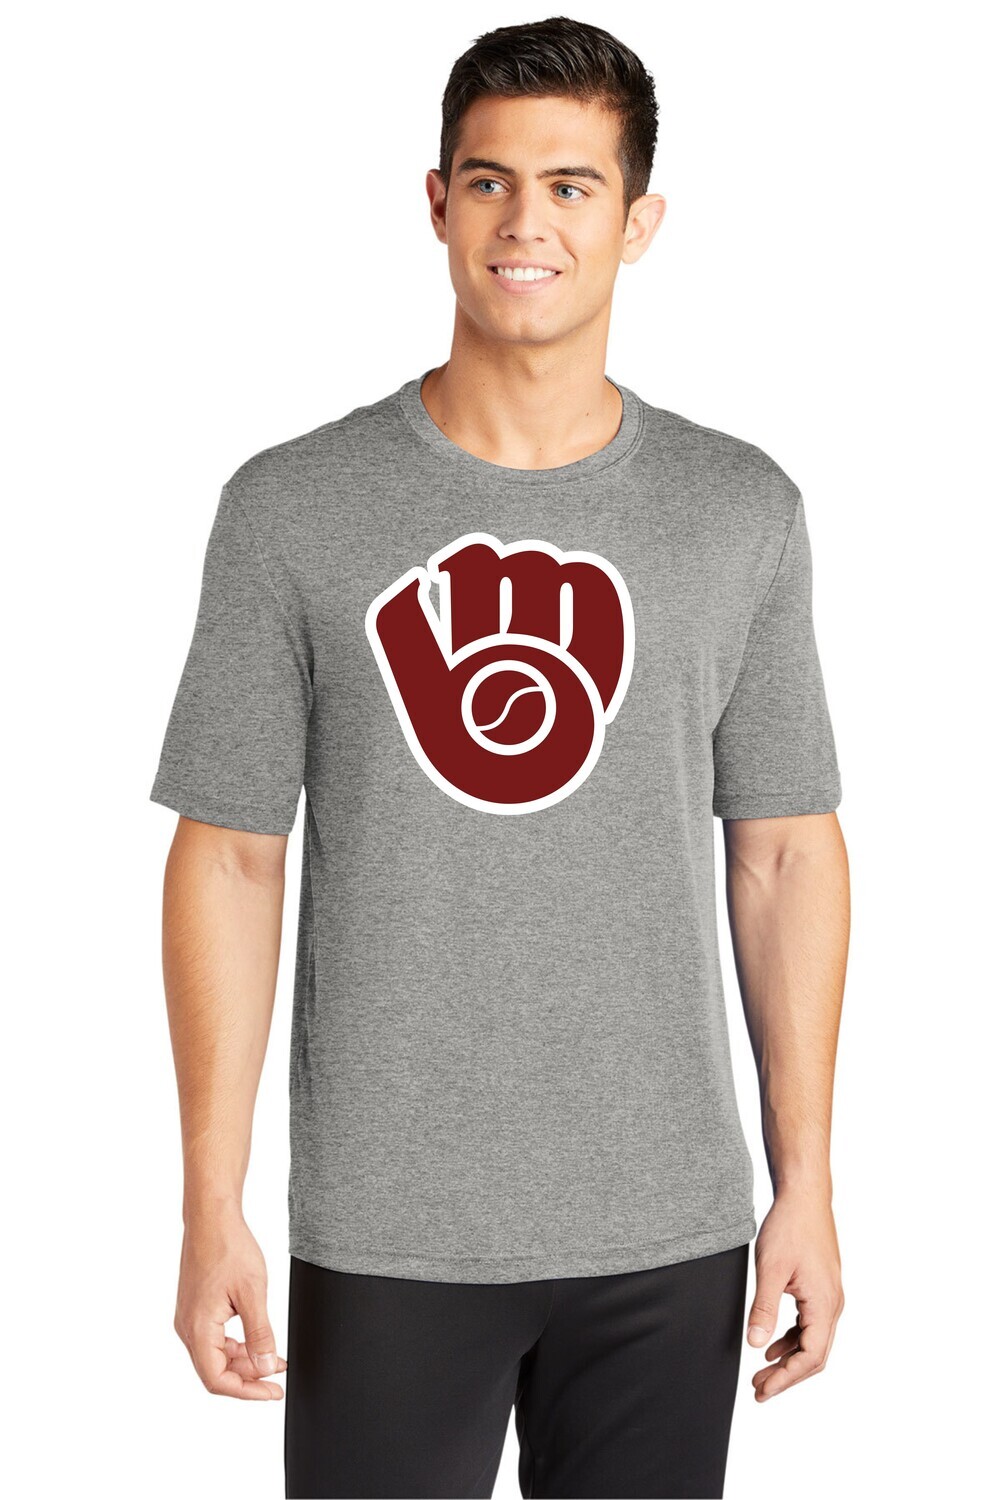 Moline Blackhawks Glove Logo 100% Poly Adult T-shirt